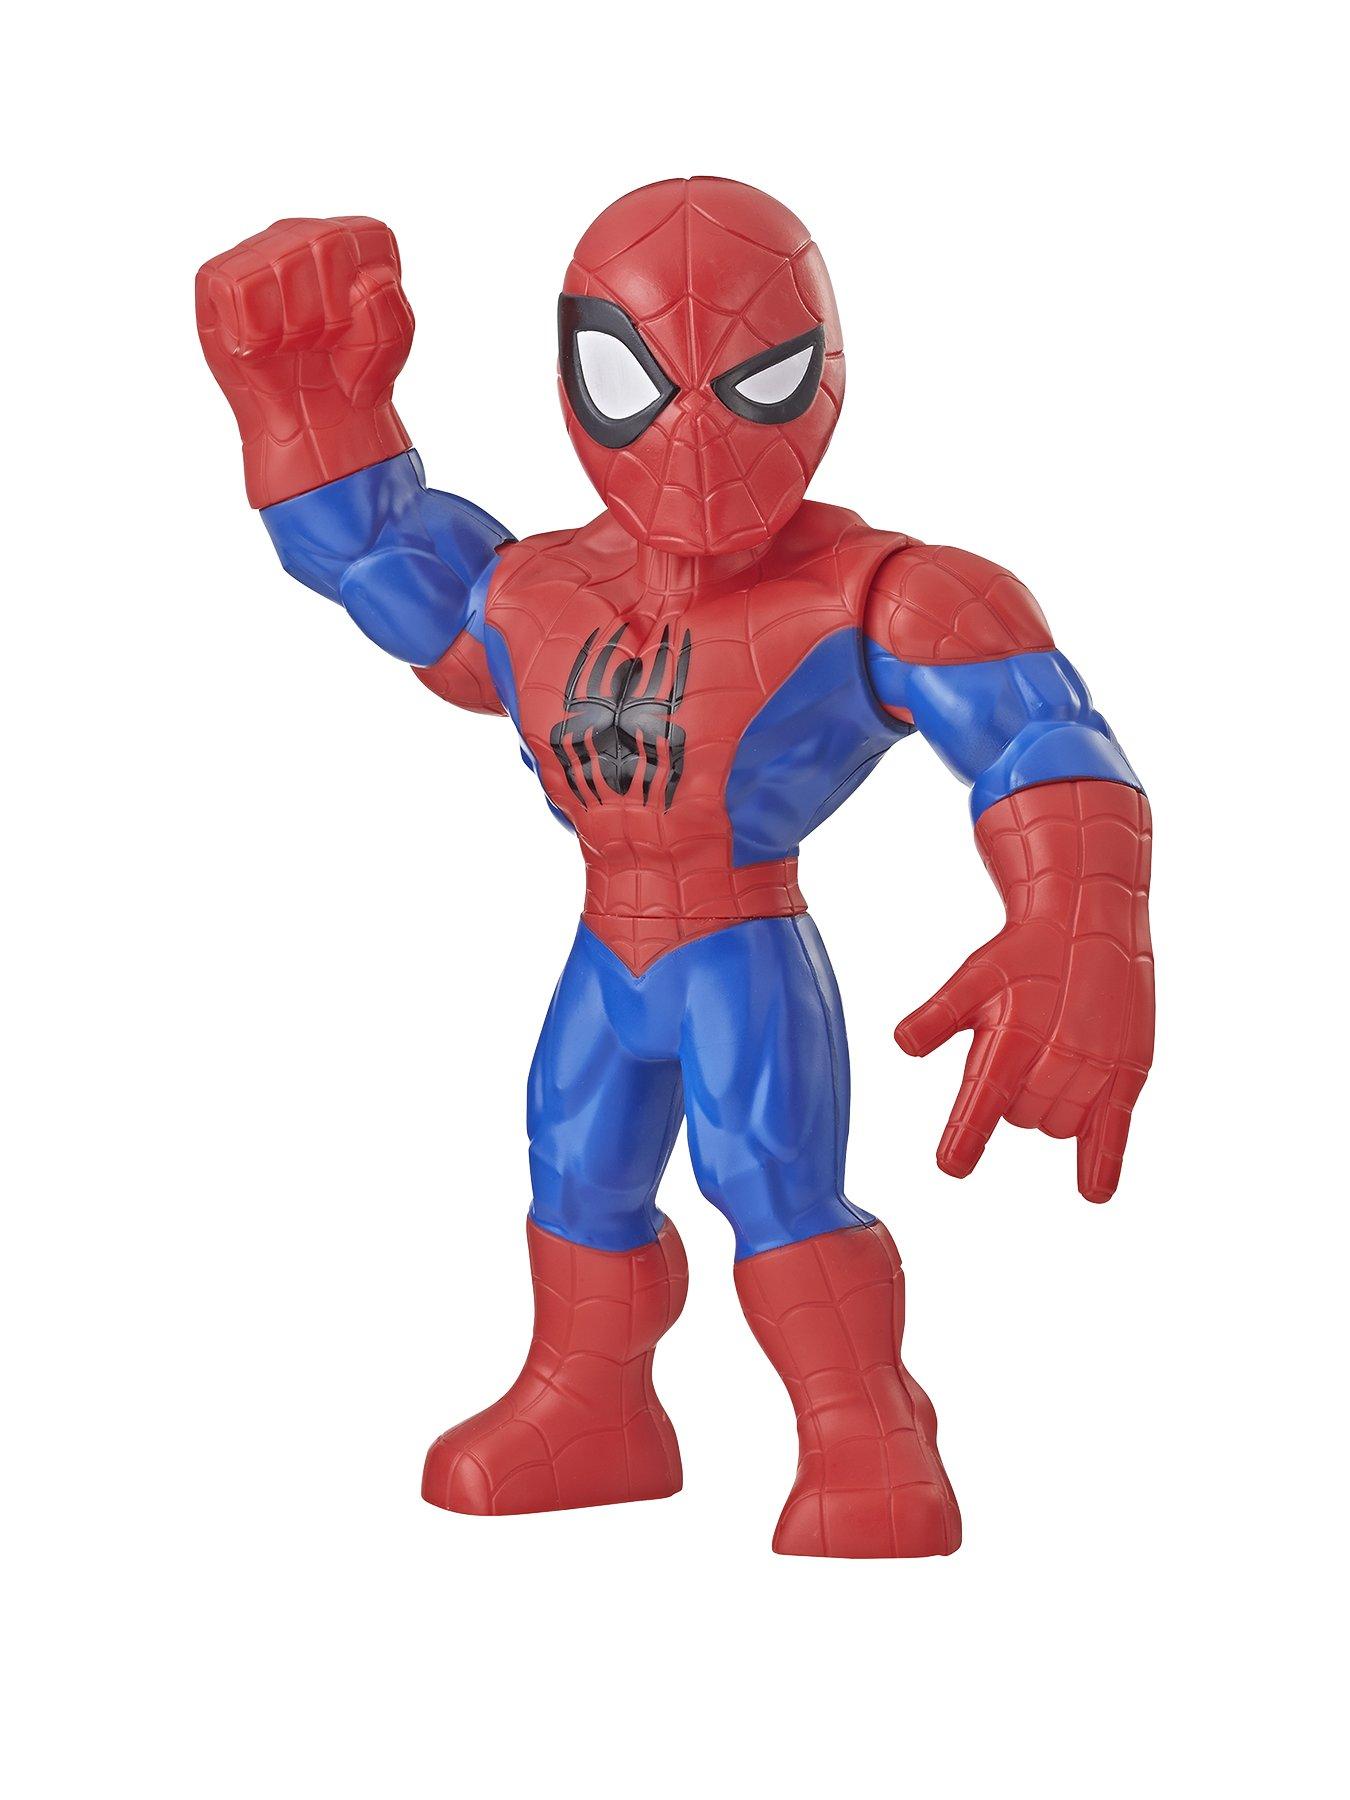 Spiderman | Action figures \u0026 playsets 